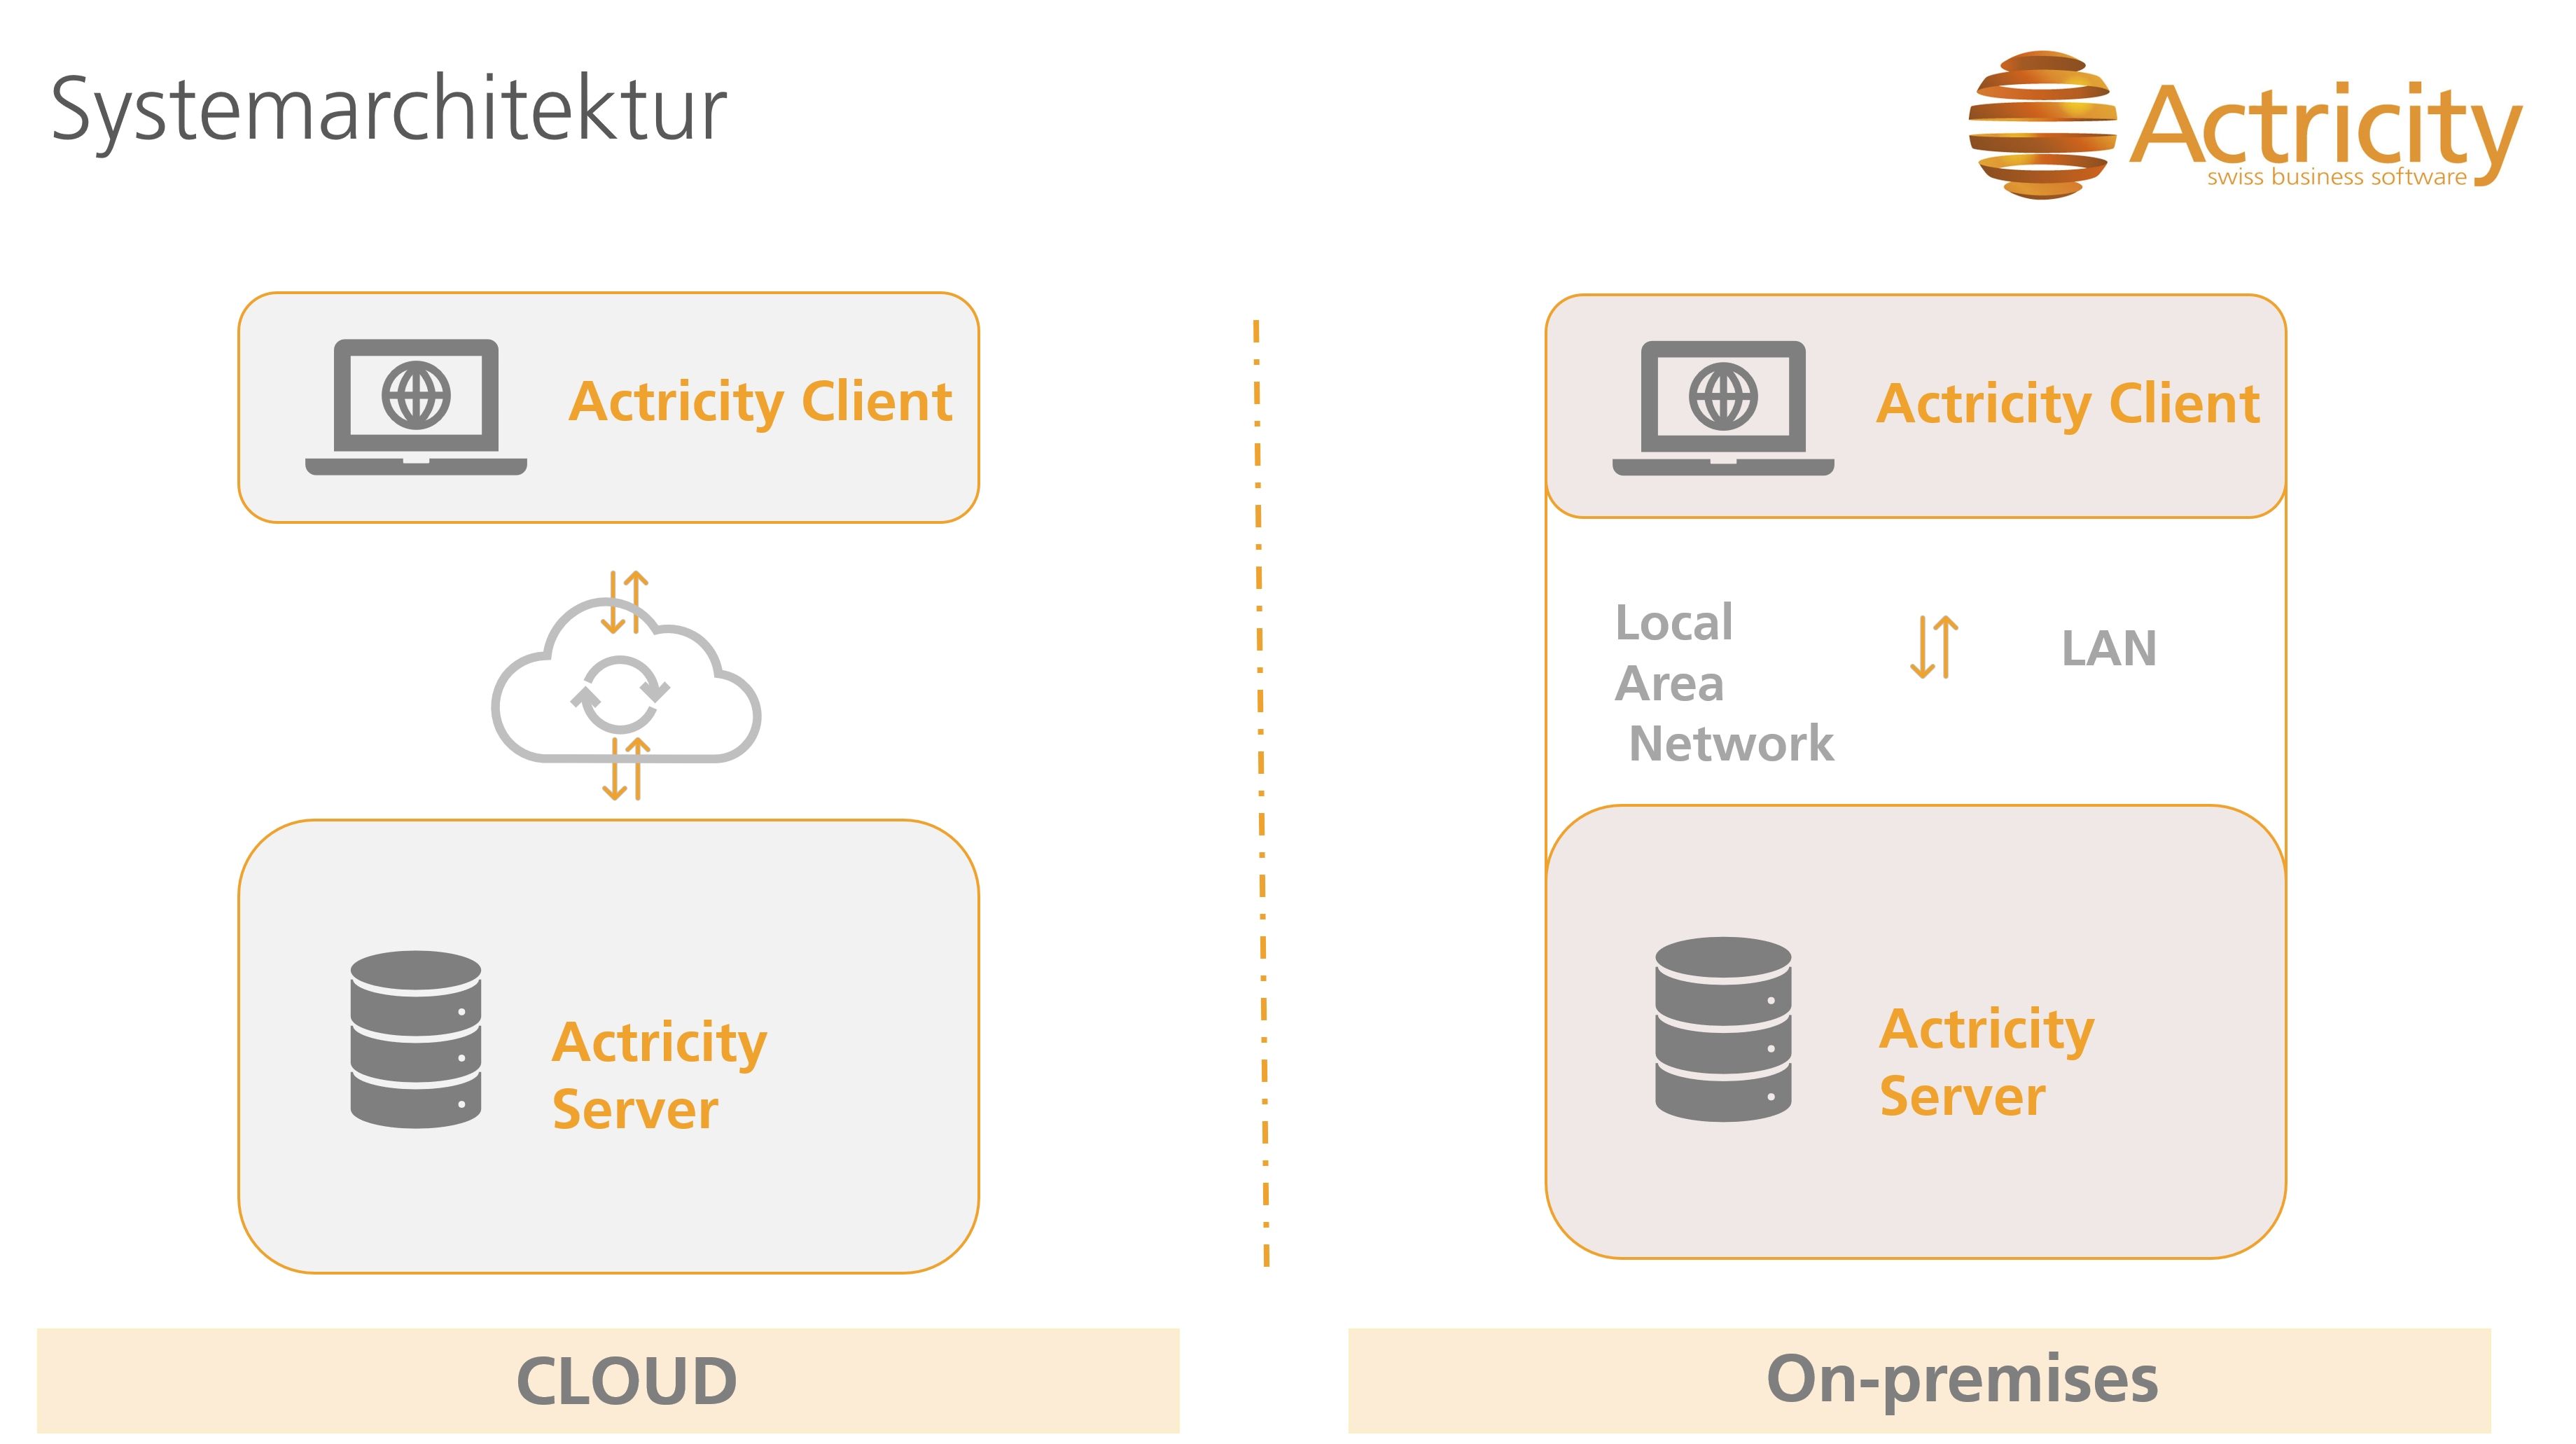 Systemarchitektur: links Cloud, rechts on-premises